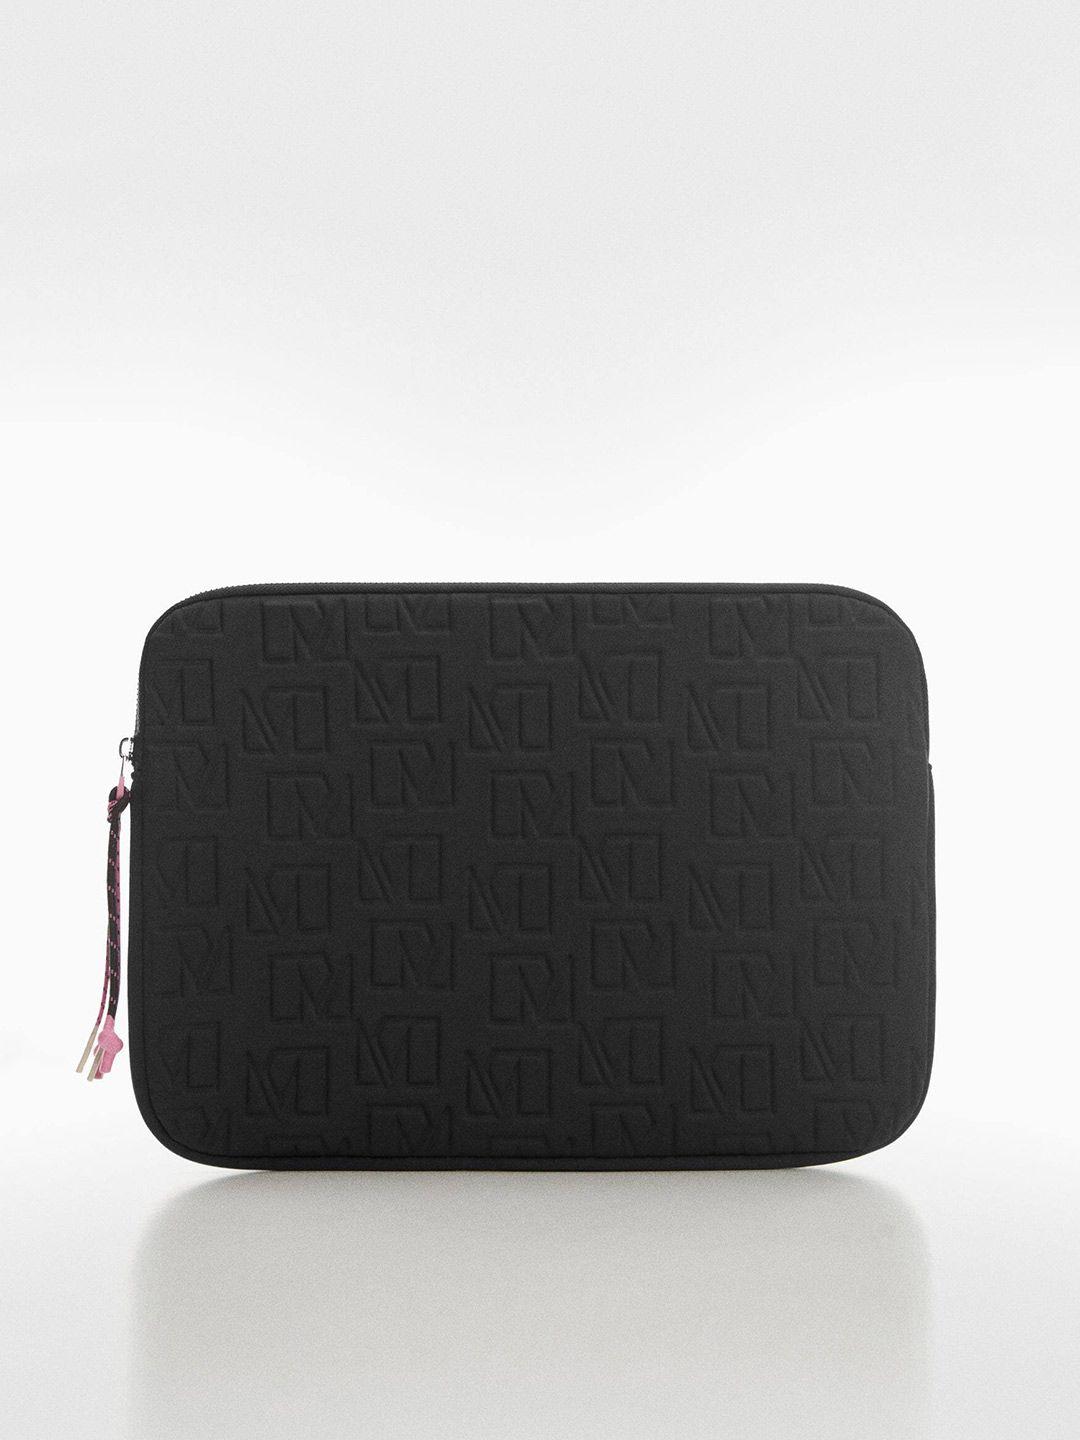 mango women brand logo textured laptop sleeve 16 inch